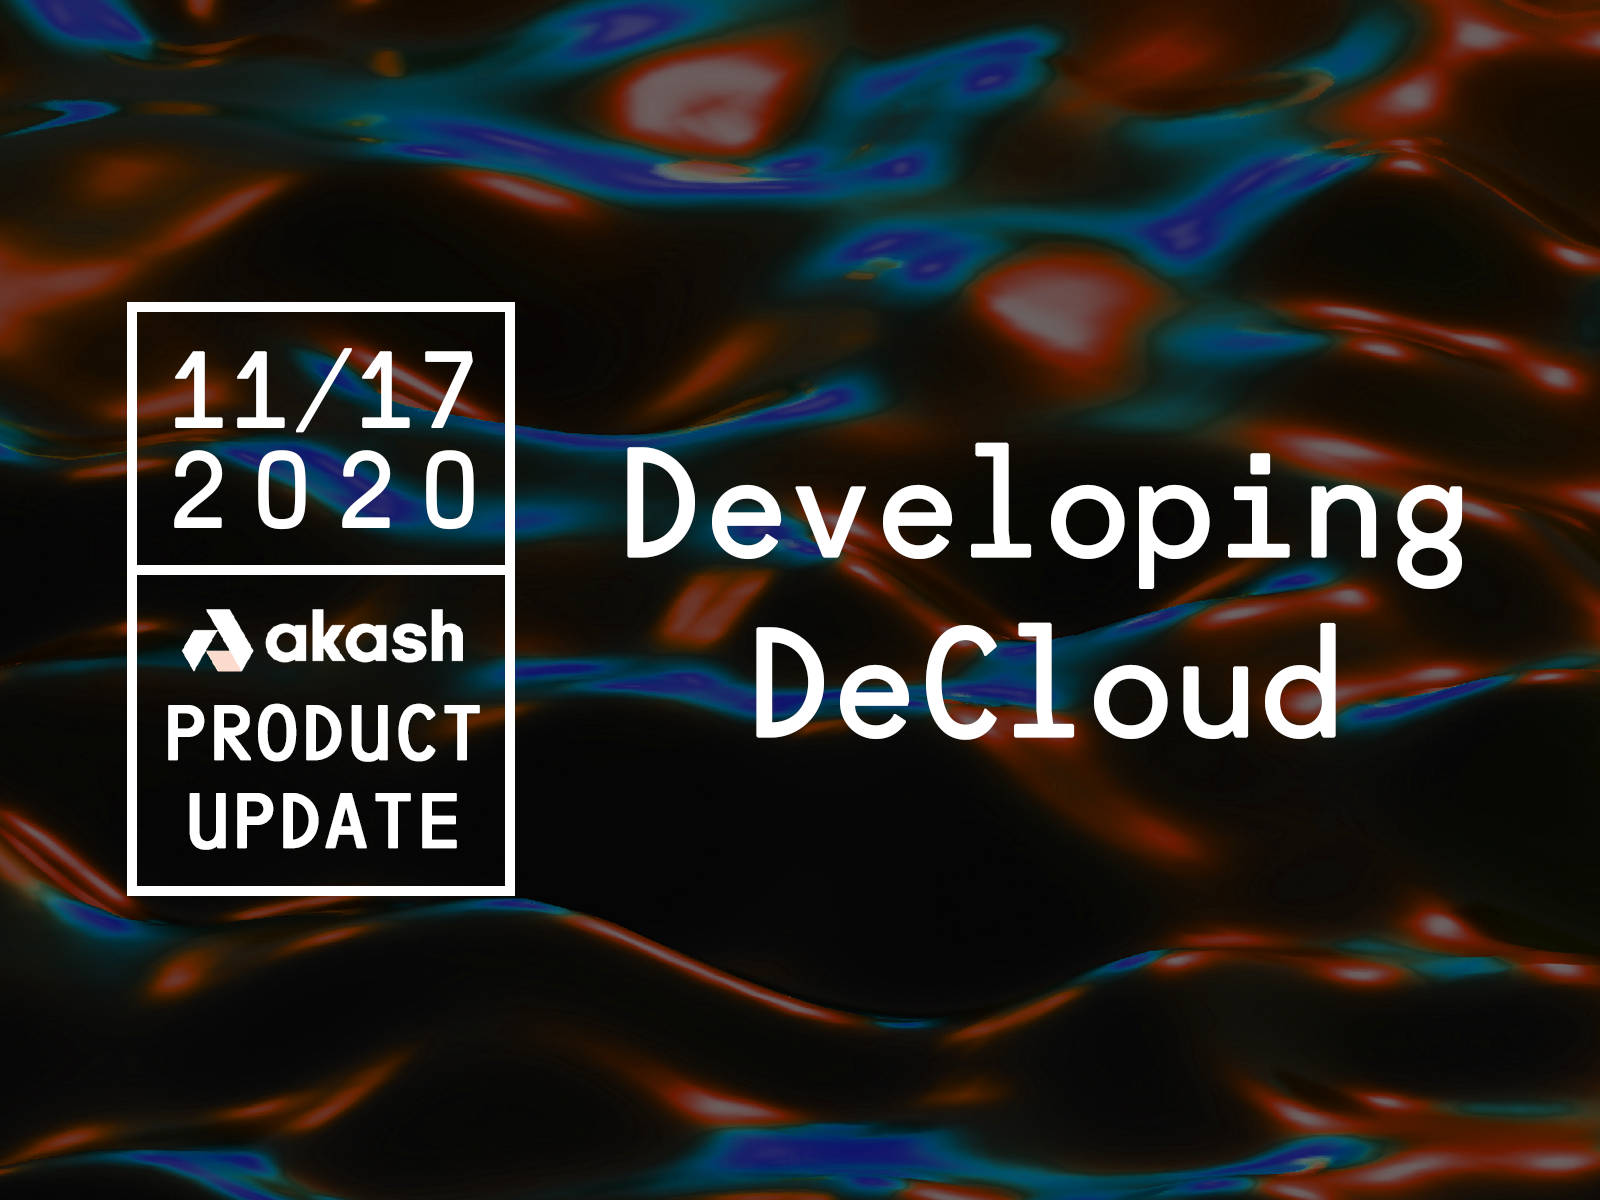 Akash Network Product Update: Developing DeCloud | Akash ...